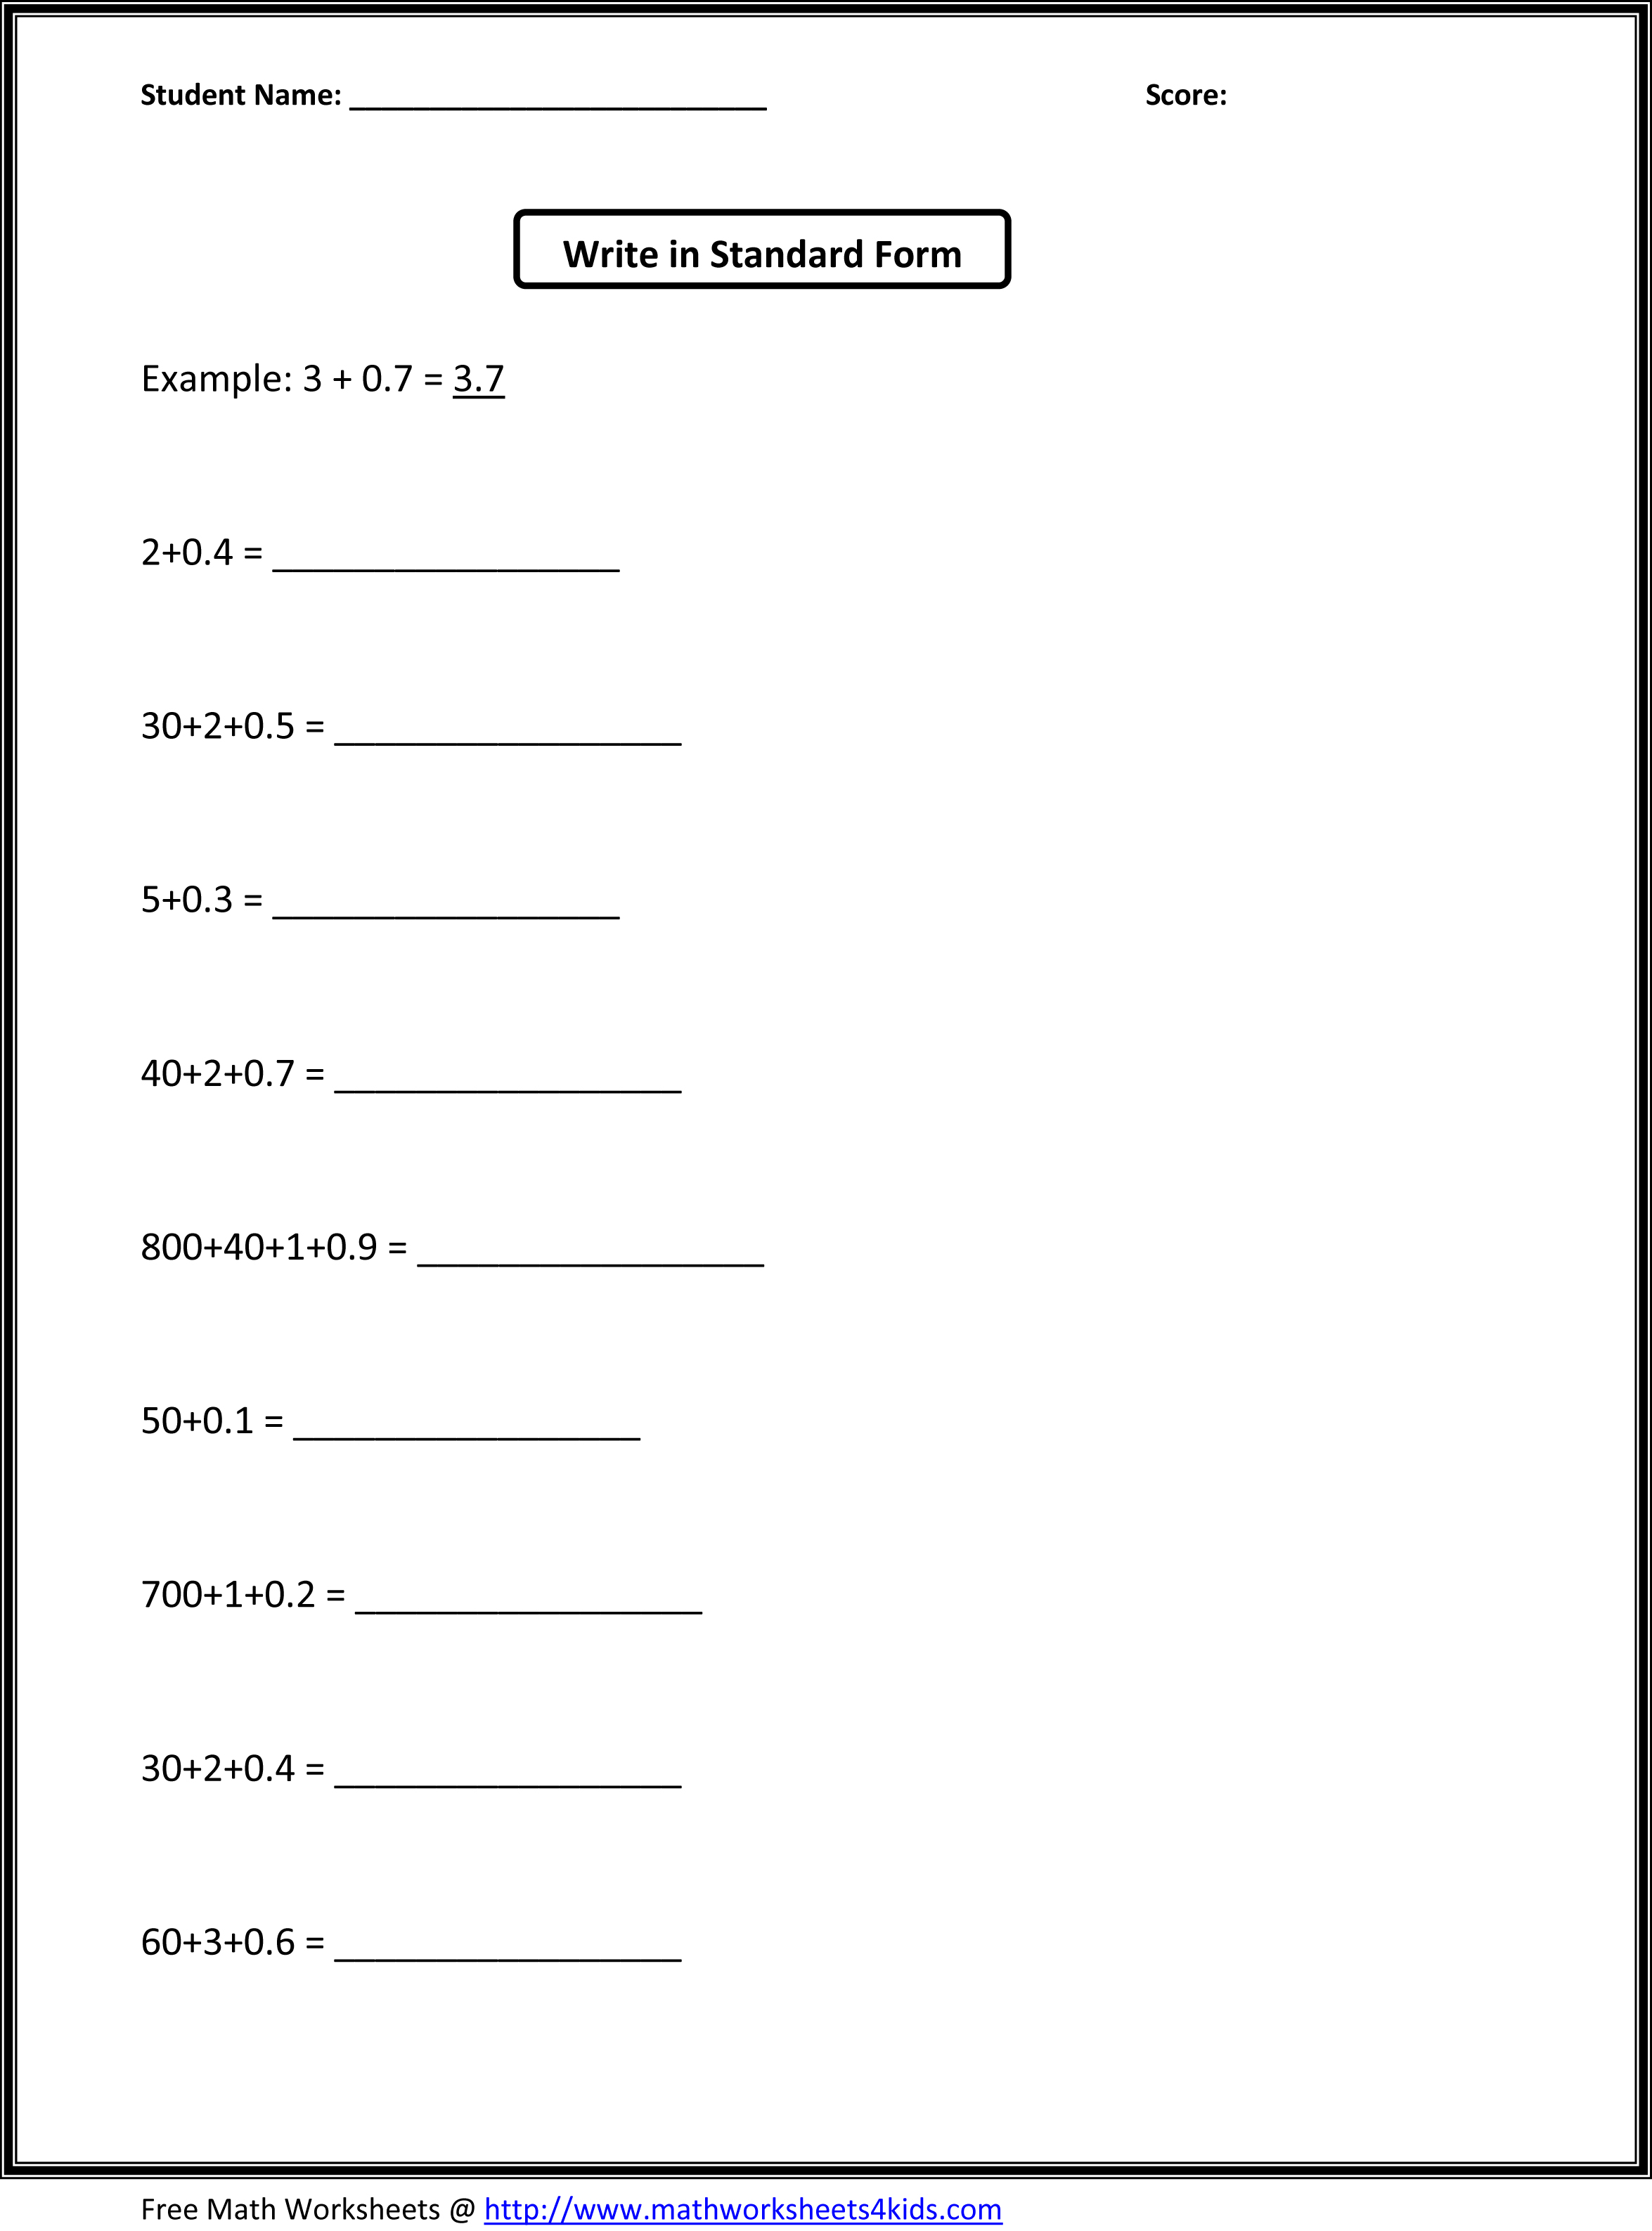 3rd Grade Math Worksheets Decimals Image